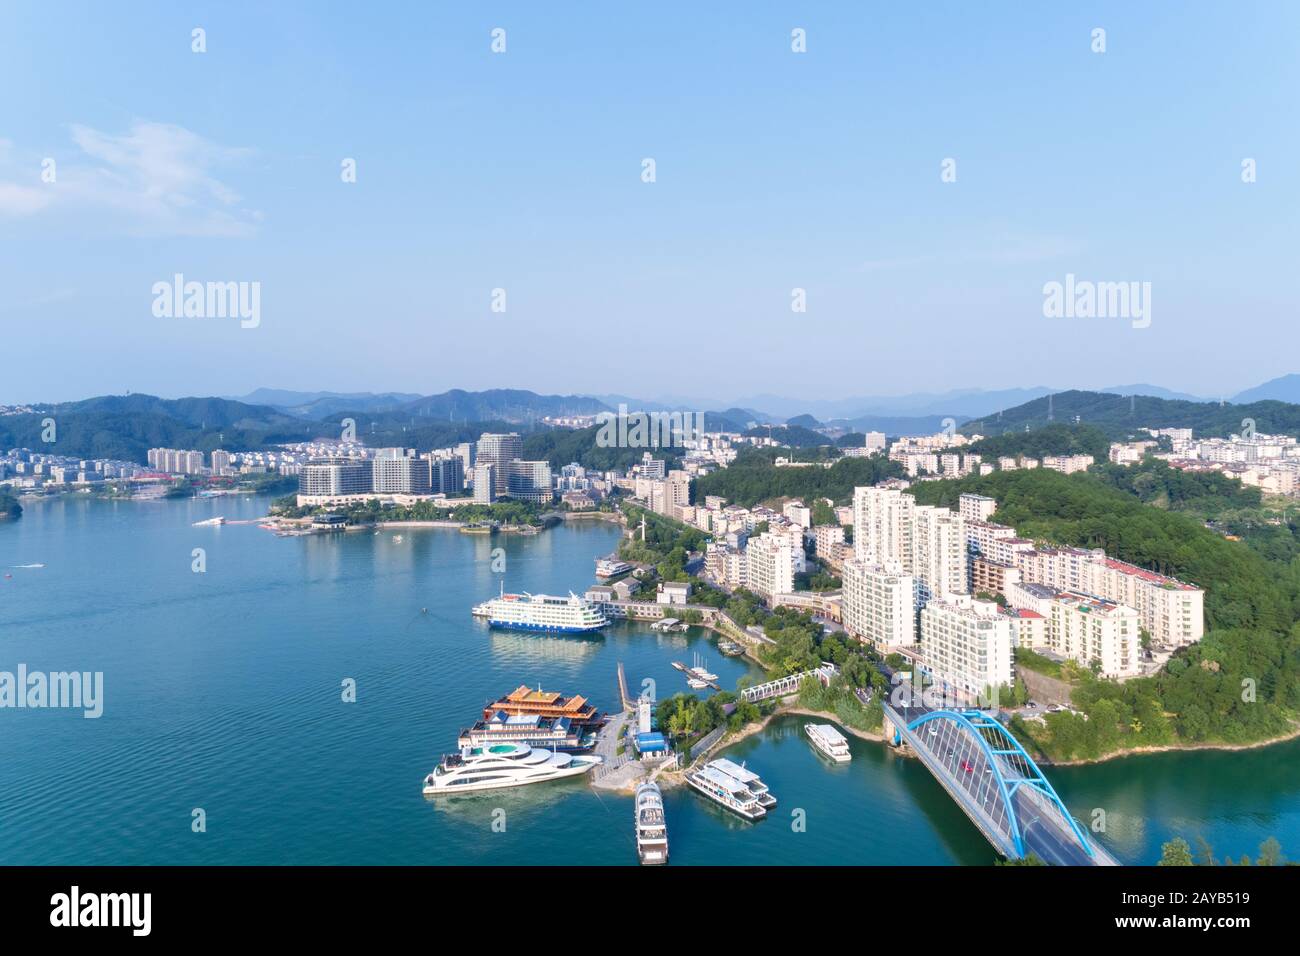 hangzhou thousand island lake and county scenery Stock Photo